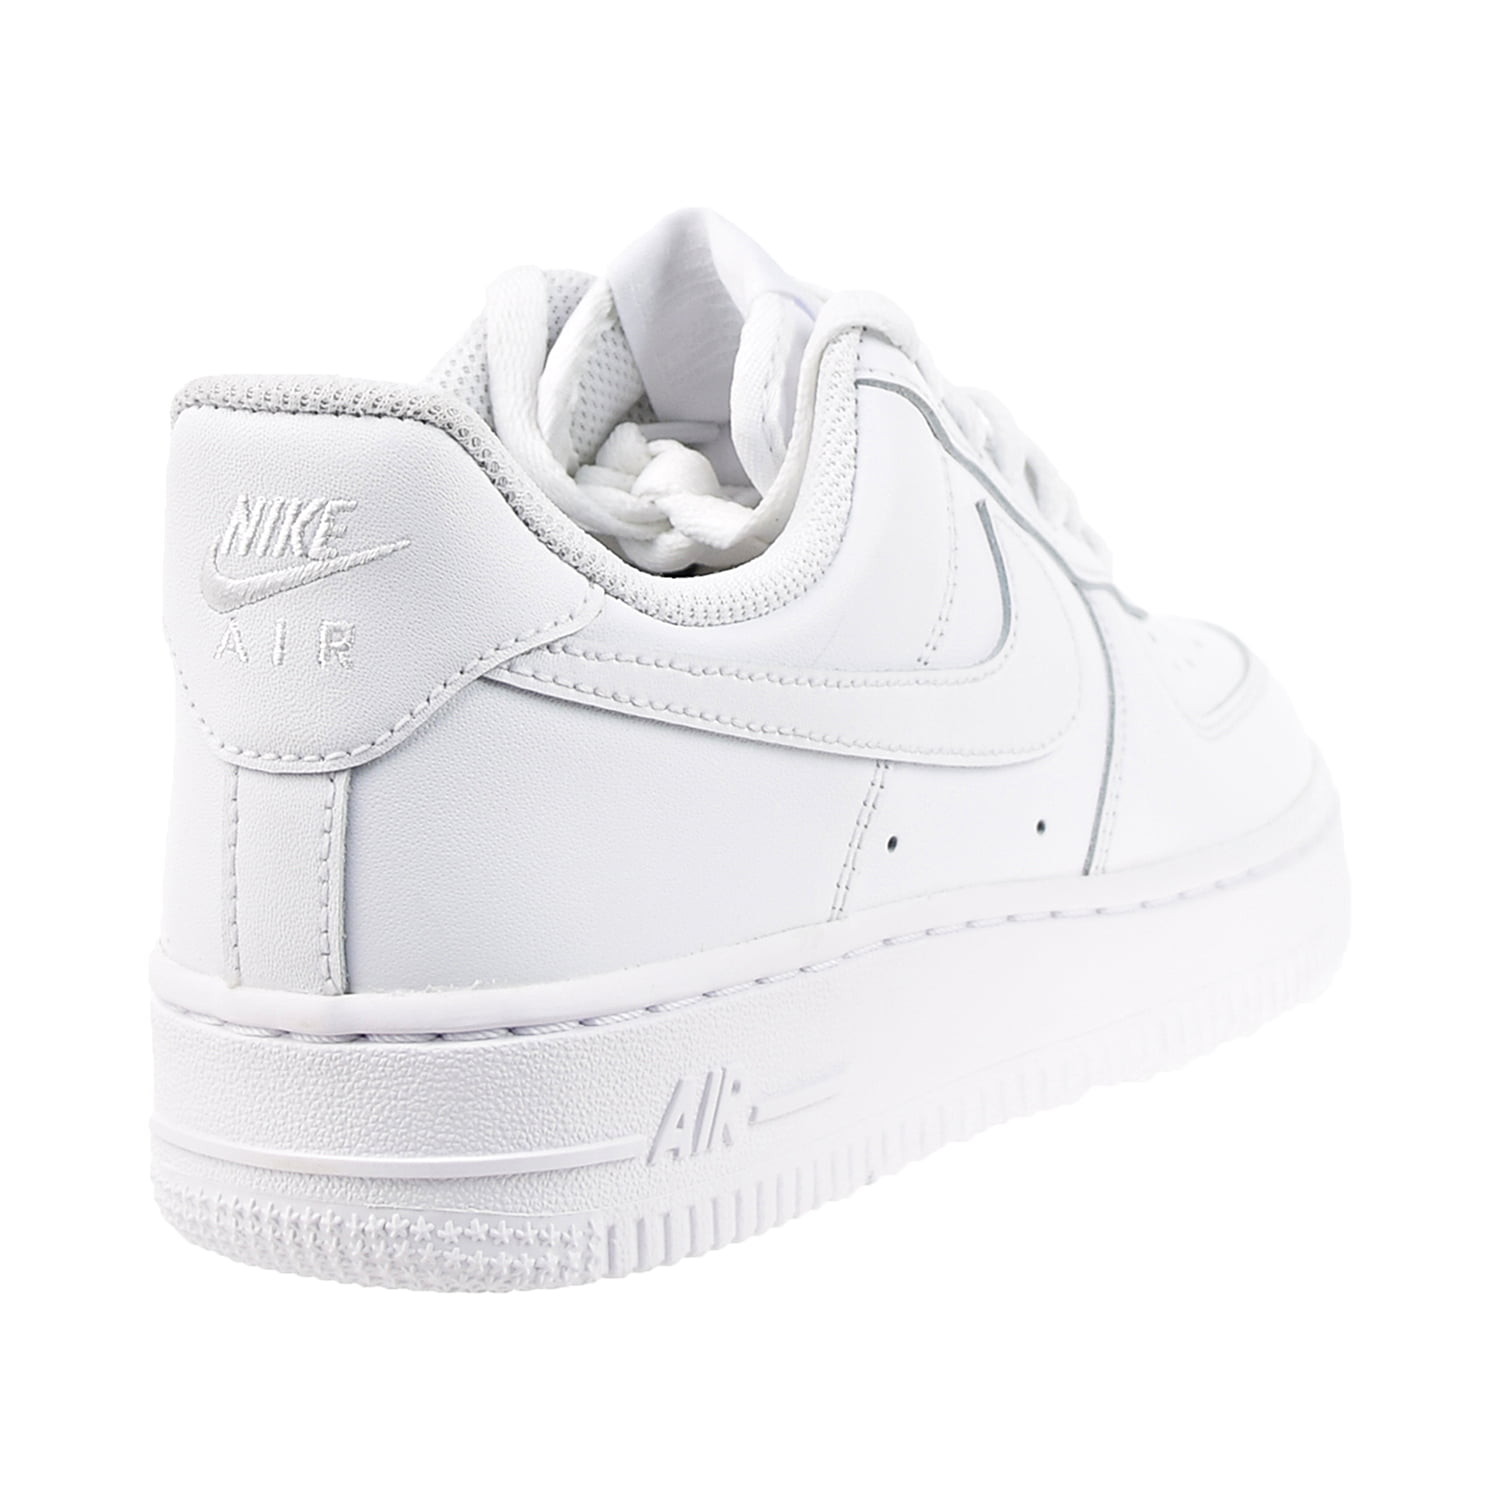 Nike Air Force 1 '07 Women's Shoes White dd8959-100